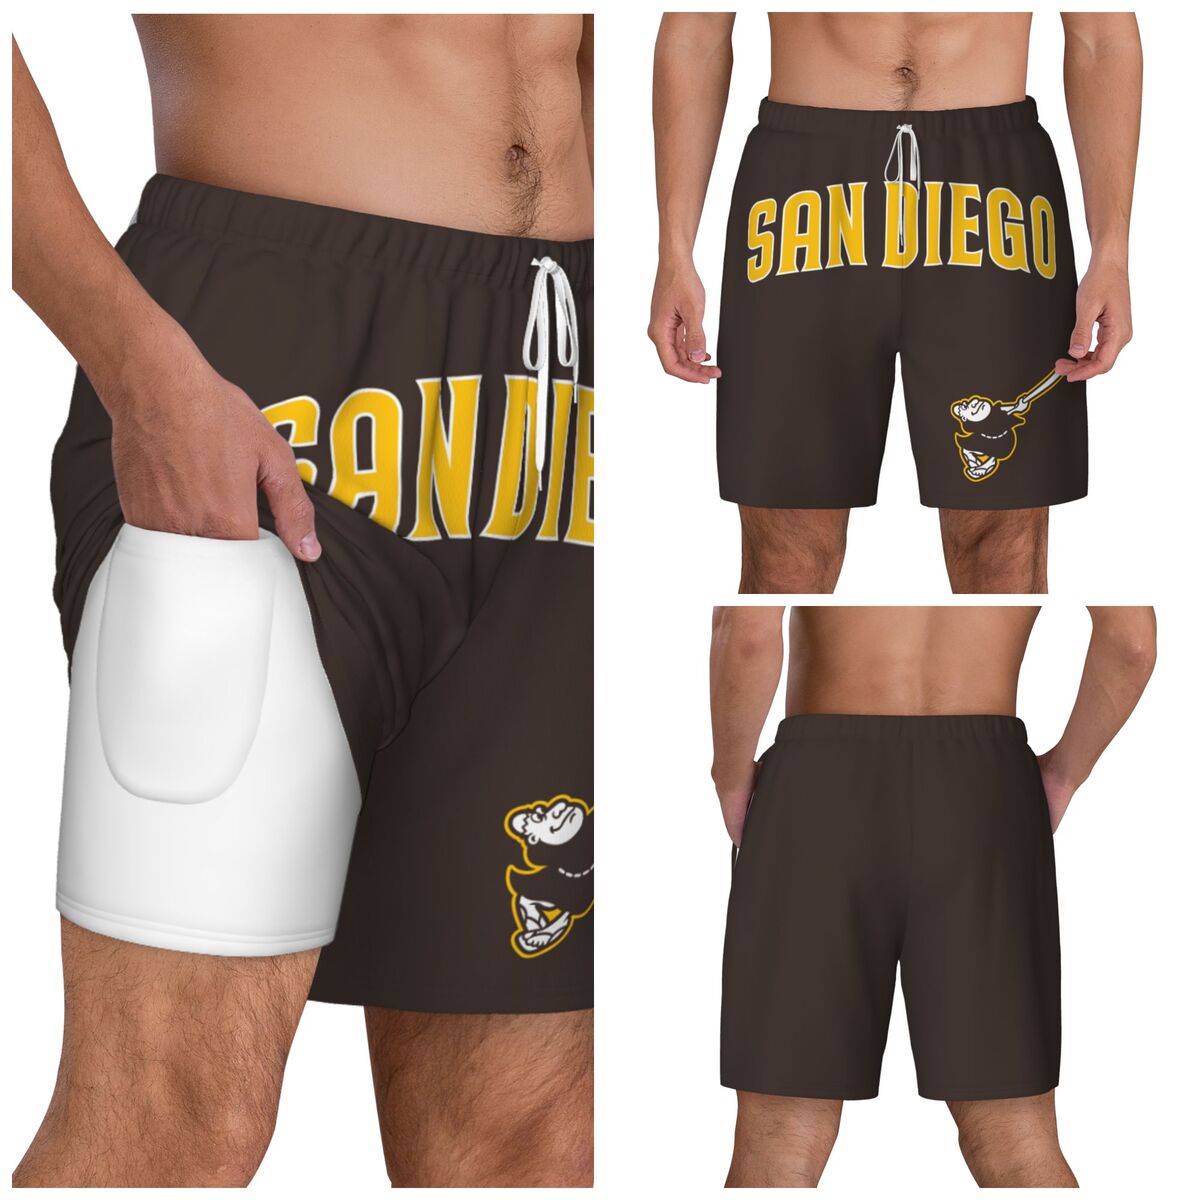 San Diego Padres Logo Men's Swim Trunks with Compression Liner